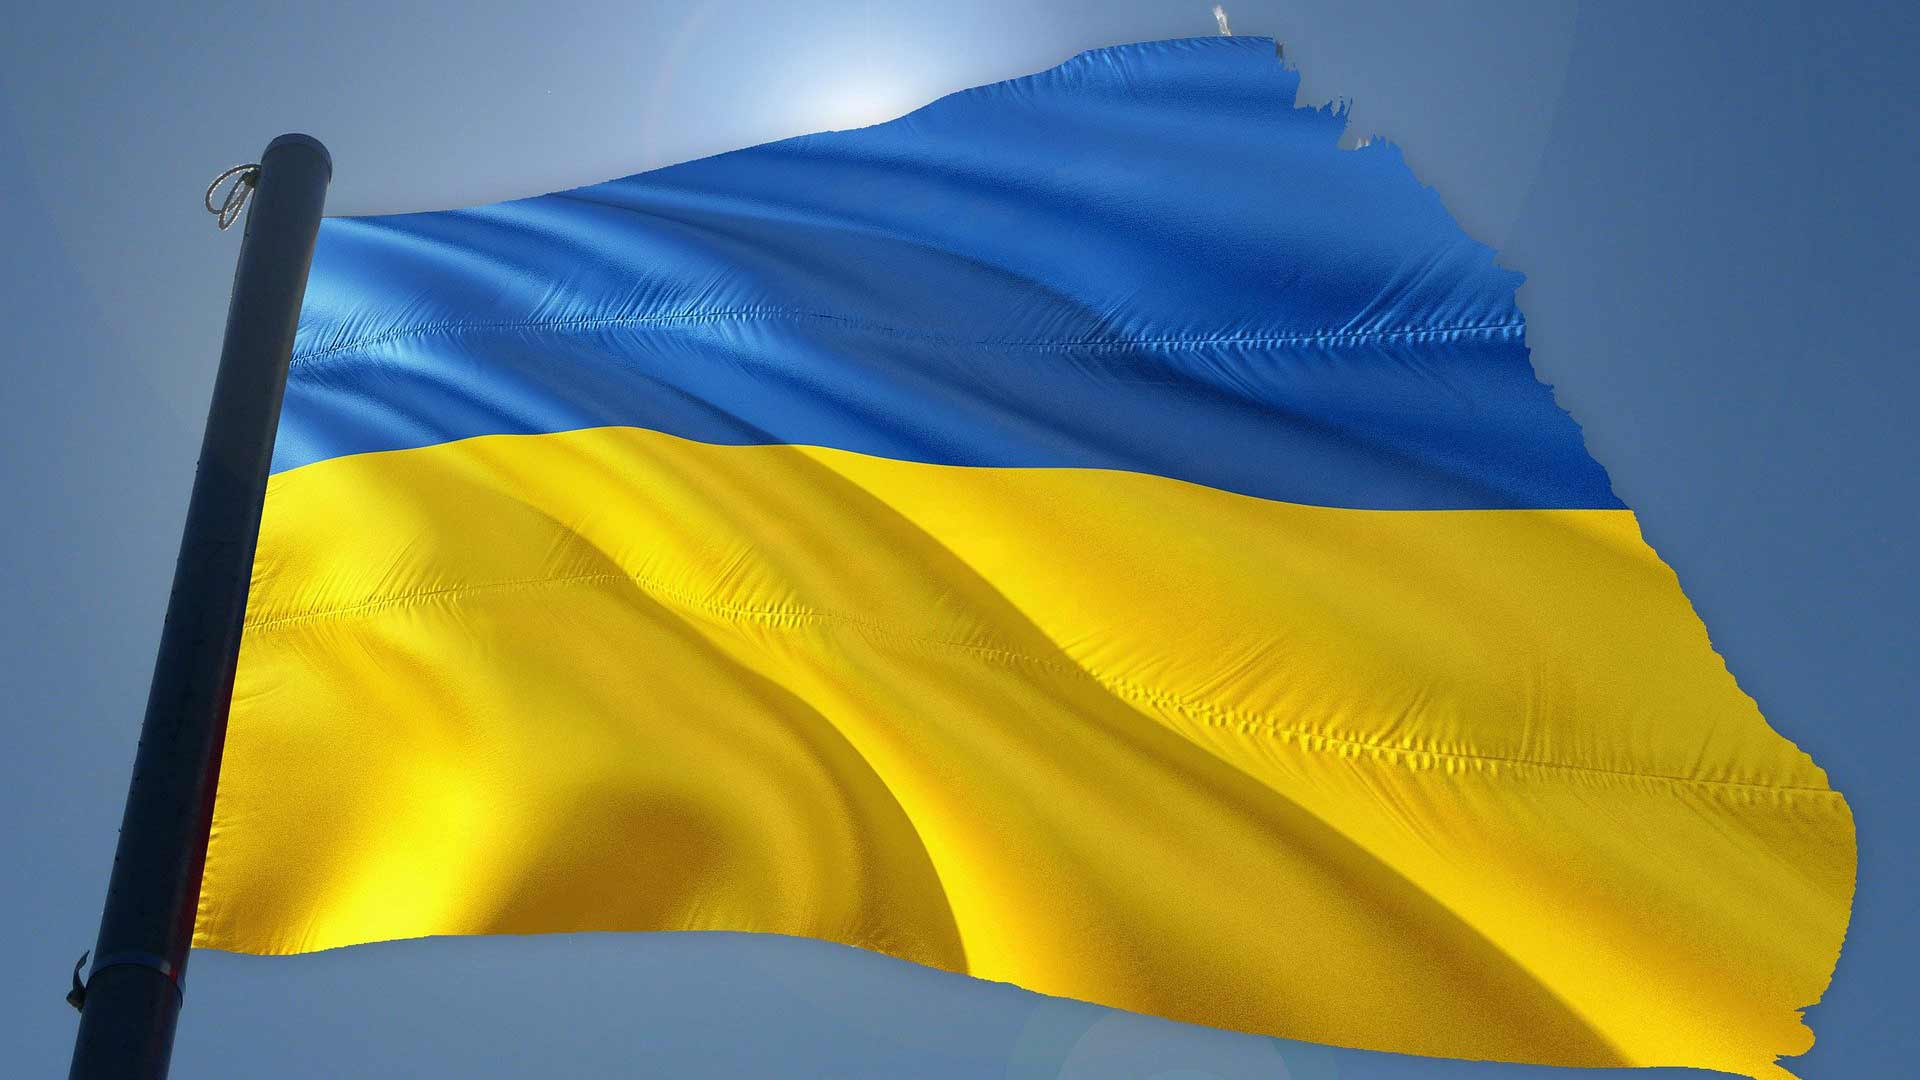 Ucraina, potenziati i servizi: sportello dedicato anche a Olbia